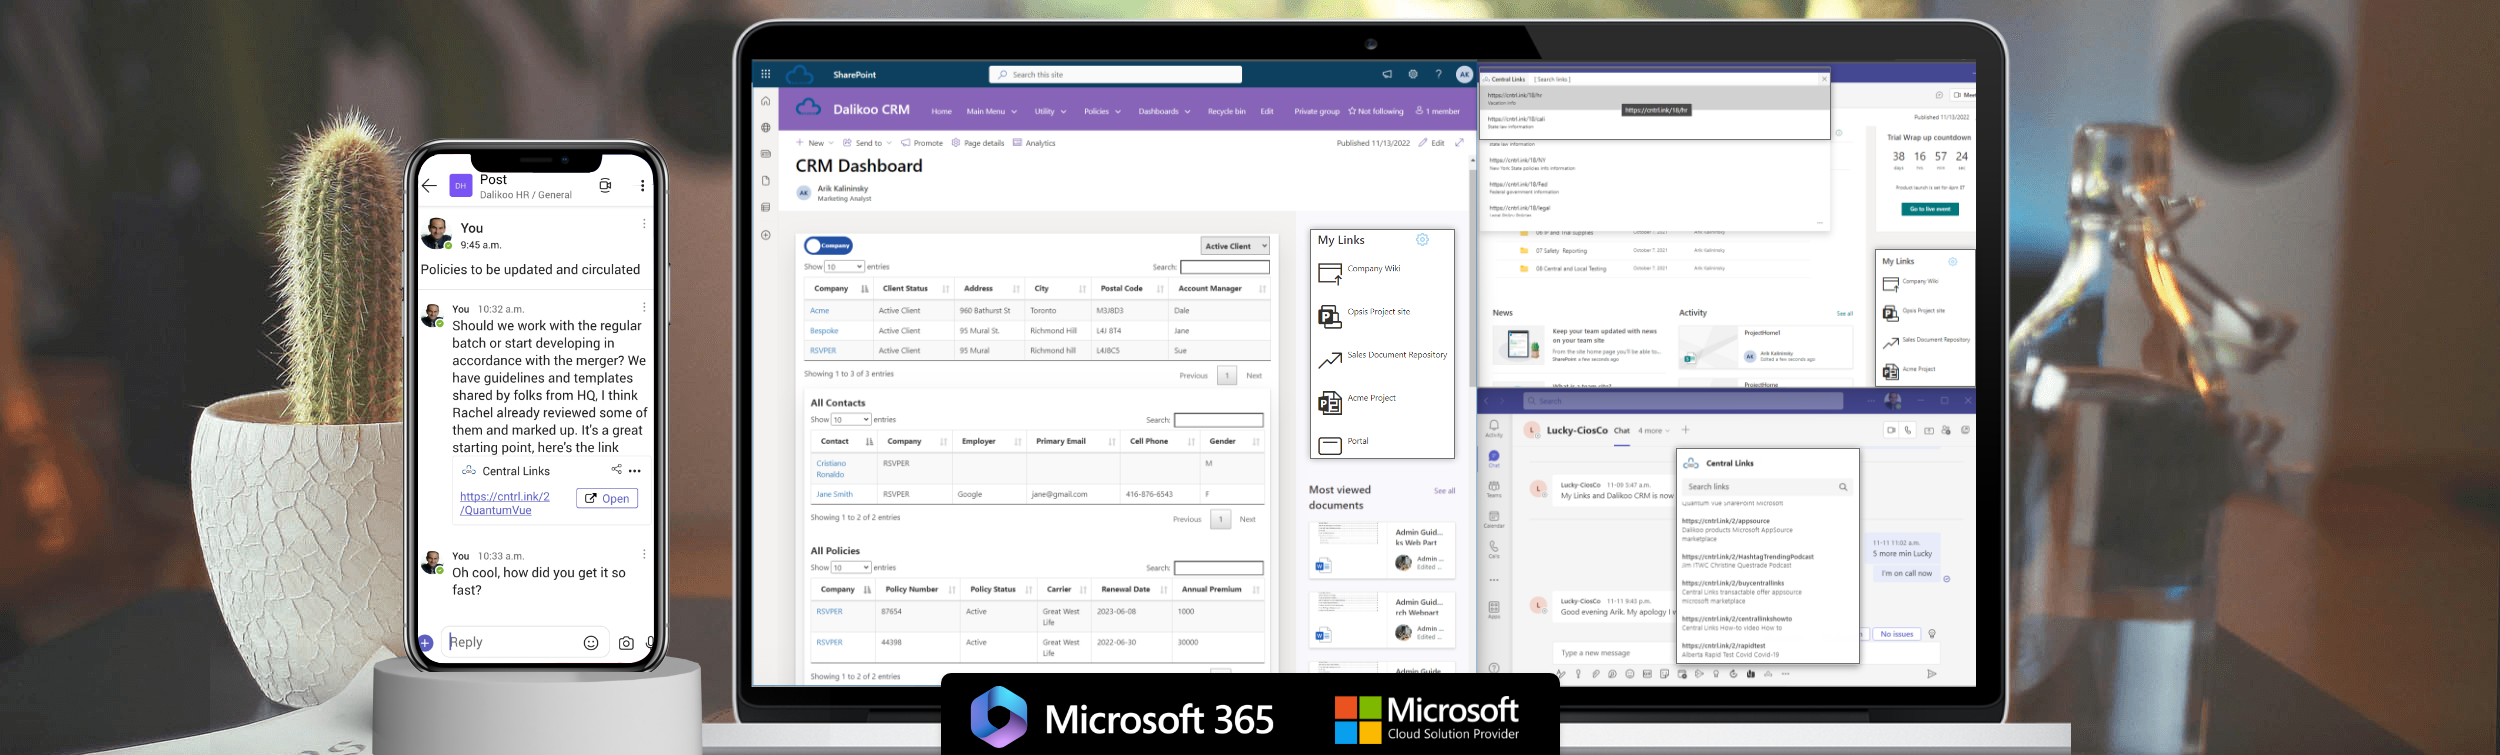 Dalikoo apps for Microsoft 365